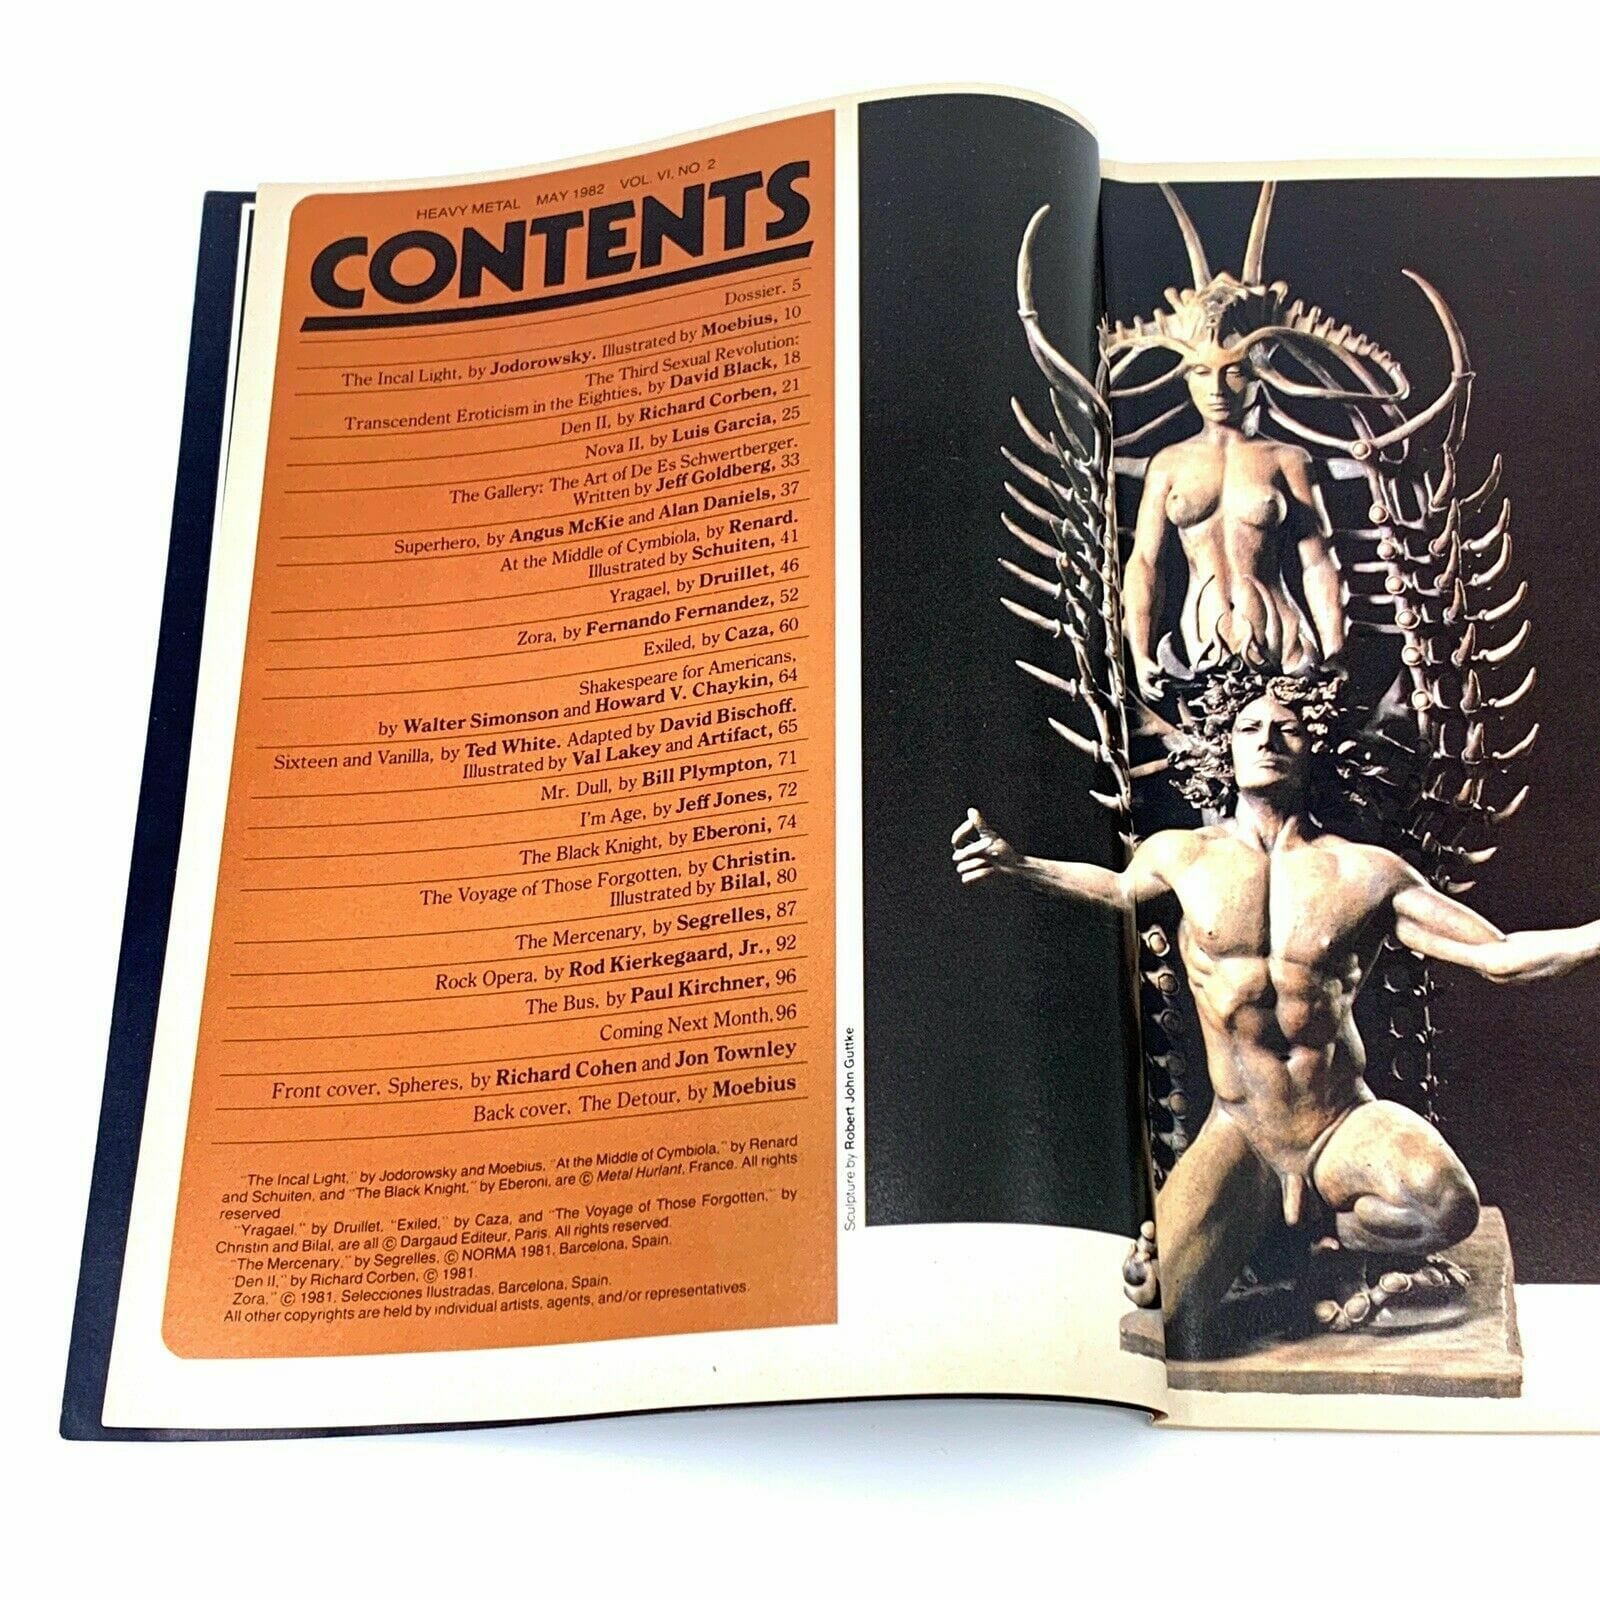 HEAVY METAL - Adult Illustrative Fantasy Magazine - May 1982 - parsimonyshoppes